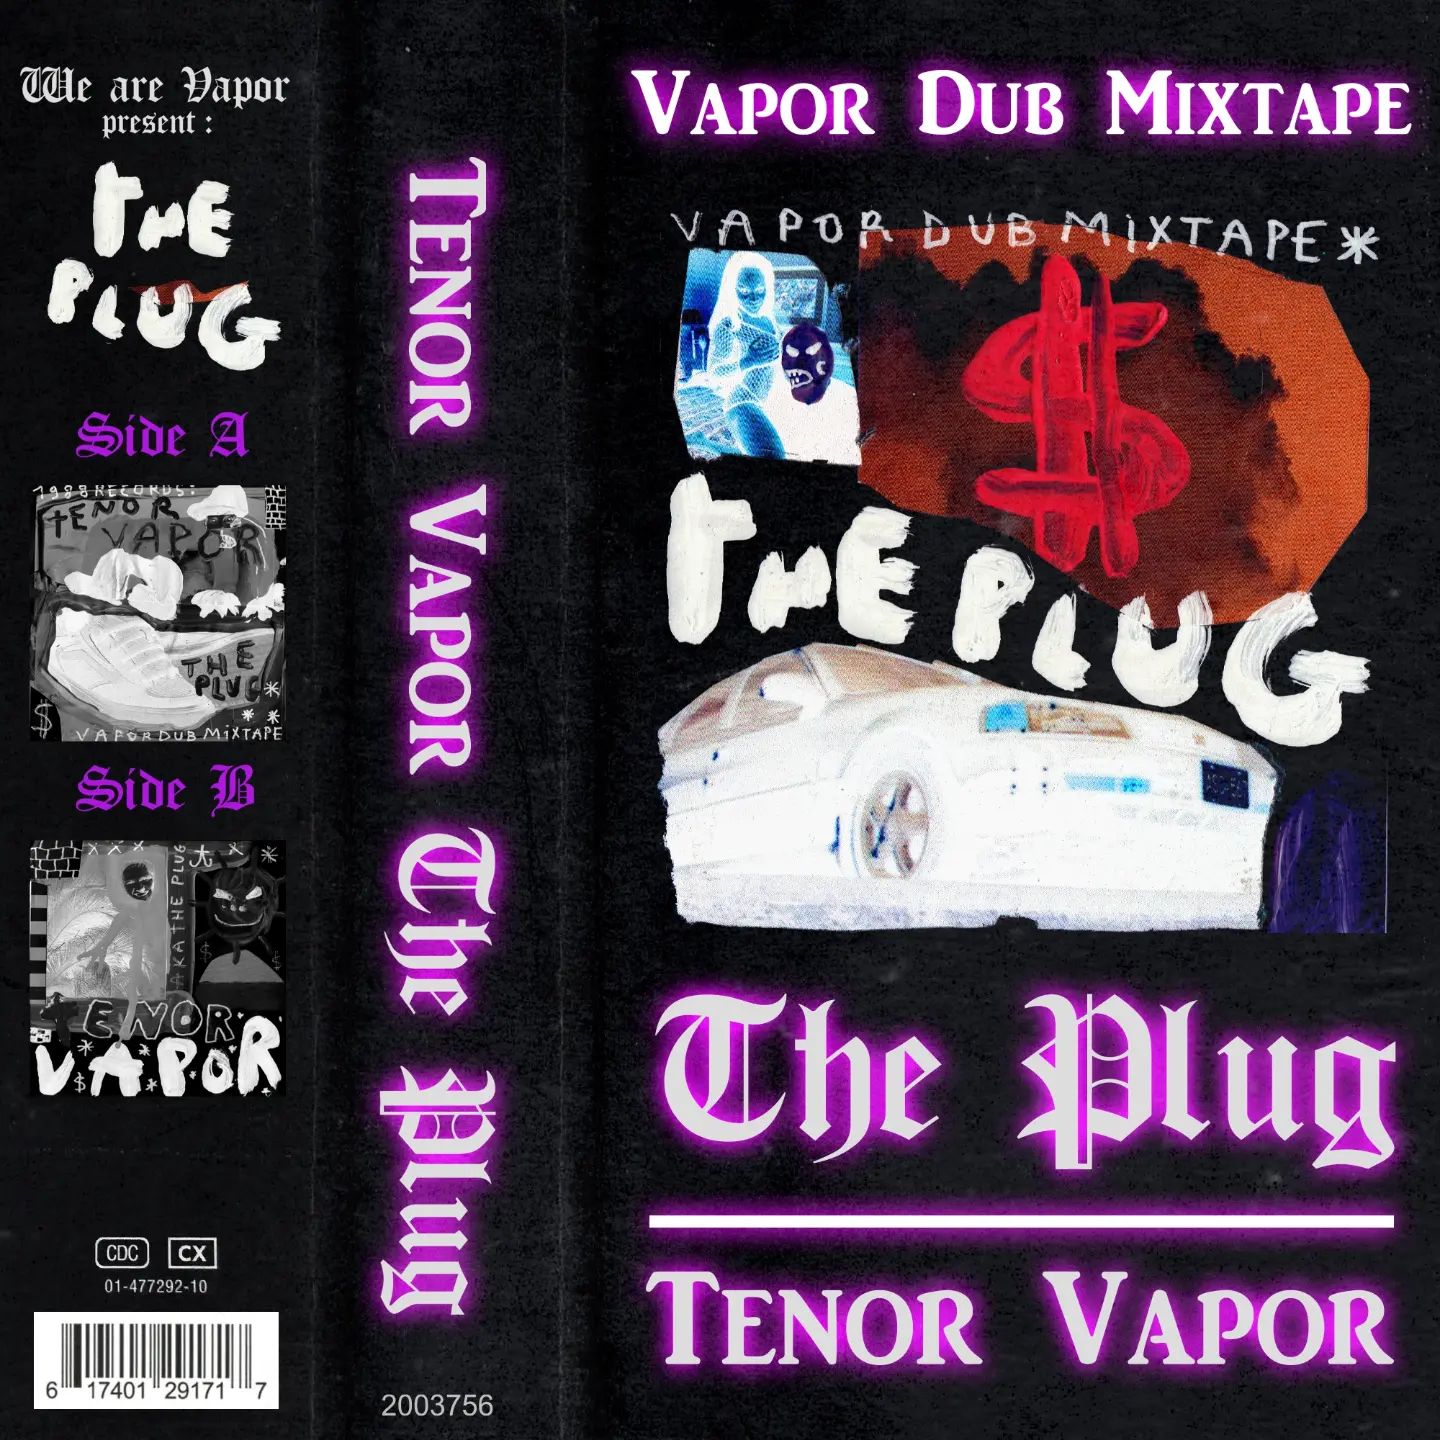 Today 4.20pm
New Vapor Dub Mixtape by @tenorvapor
Link in bio

#wearevapor